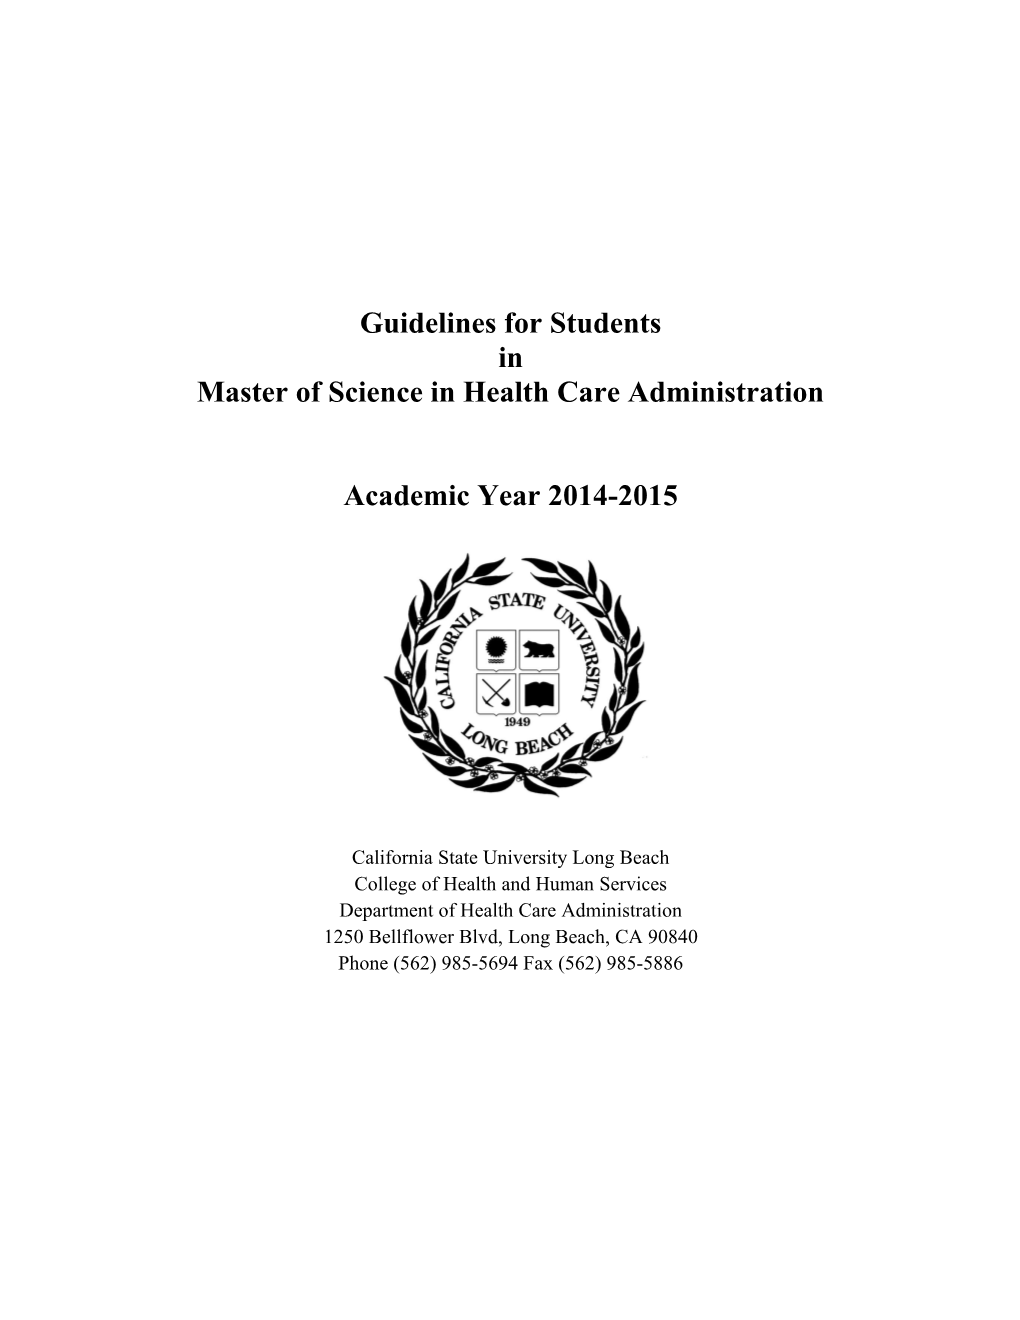 Accelerated MSHCA Graduate Handbook